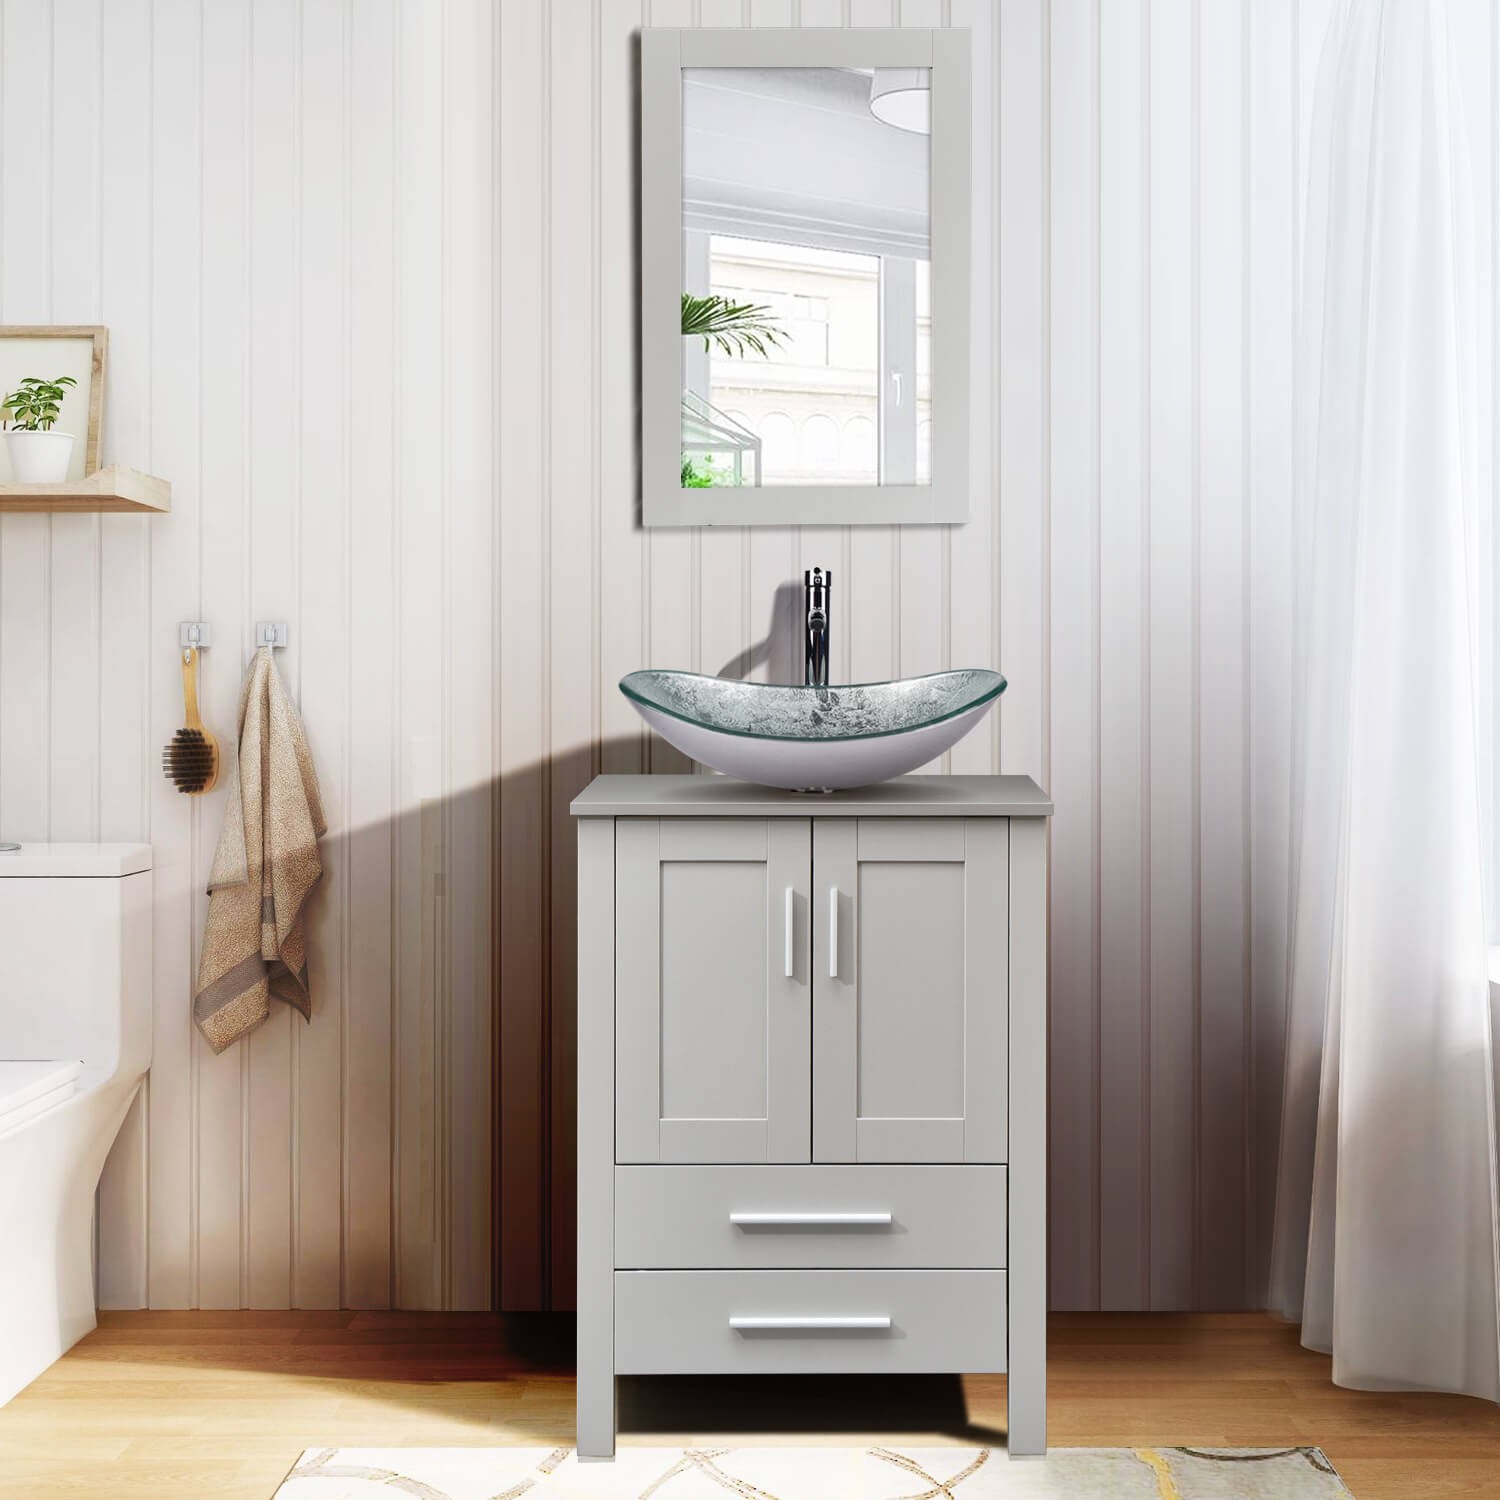 Elecwish gray wood bathroom vanity with silver boat glass sink BG005SI in bathroom